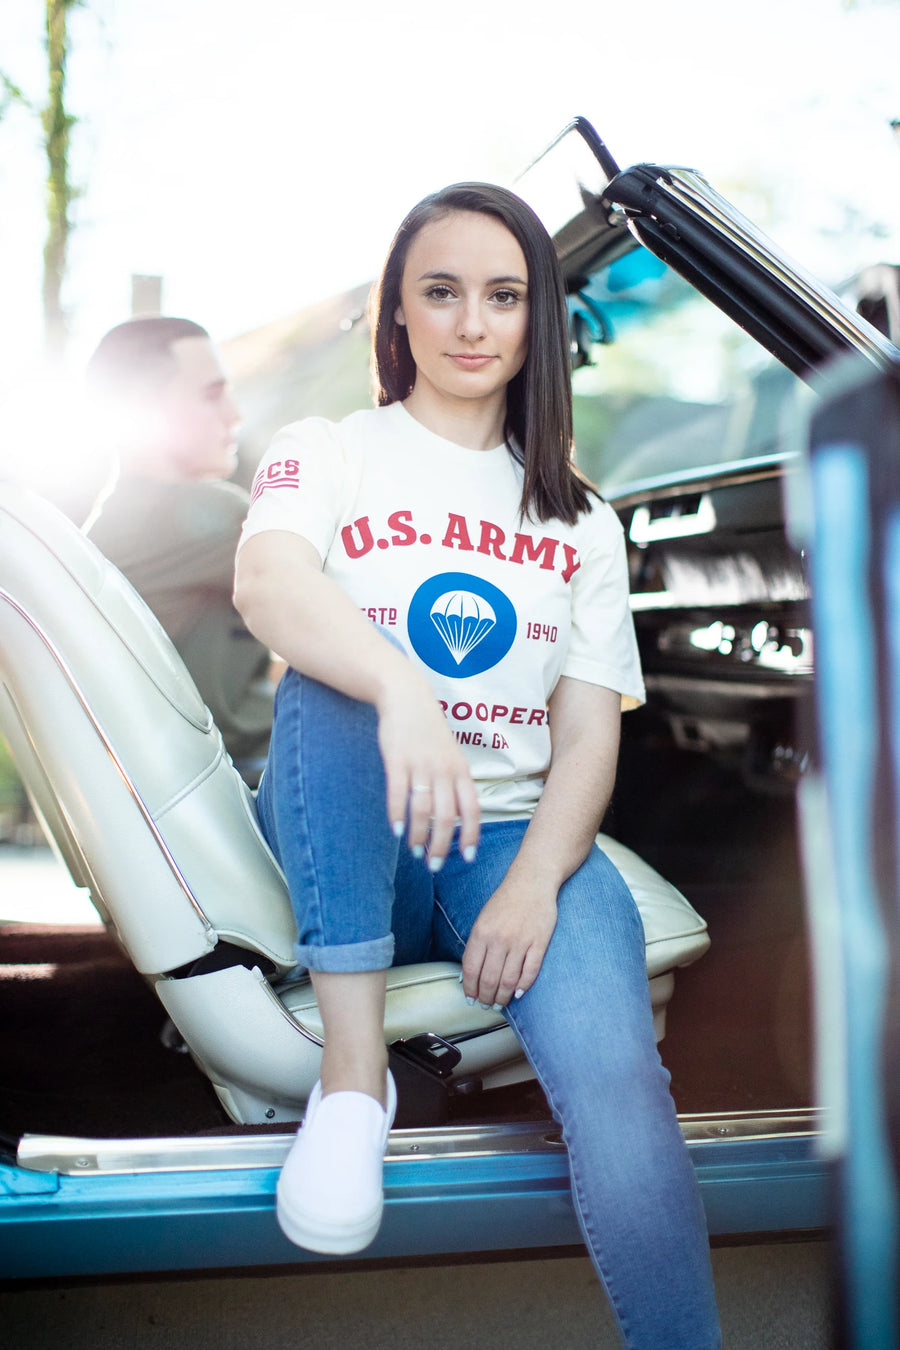 Airborne Classic White T-Shirt Female Lifestyle Photo